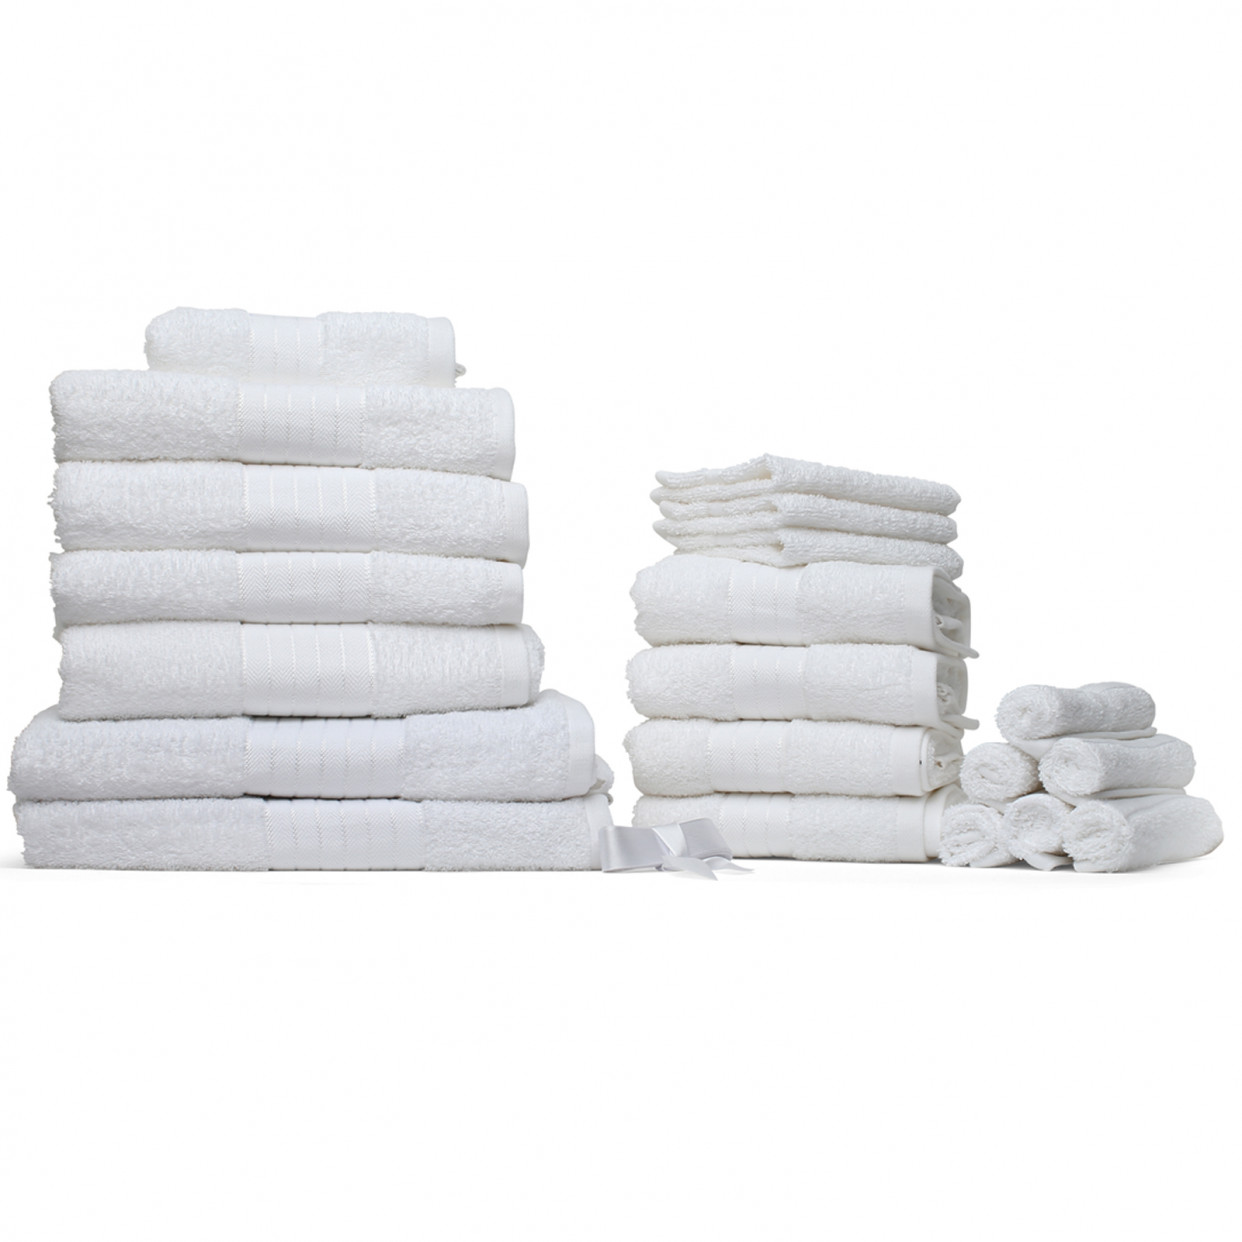 Dreamscene Towel Bale 20 Piece - White>